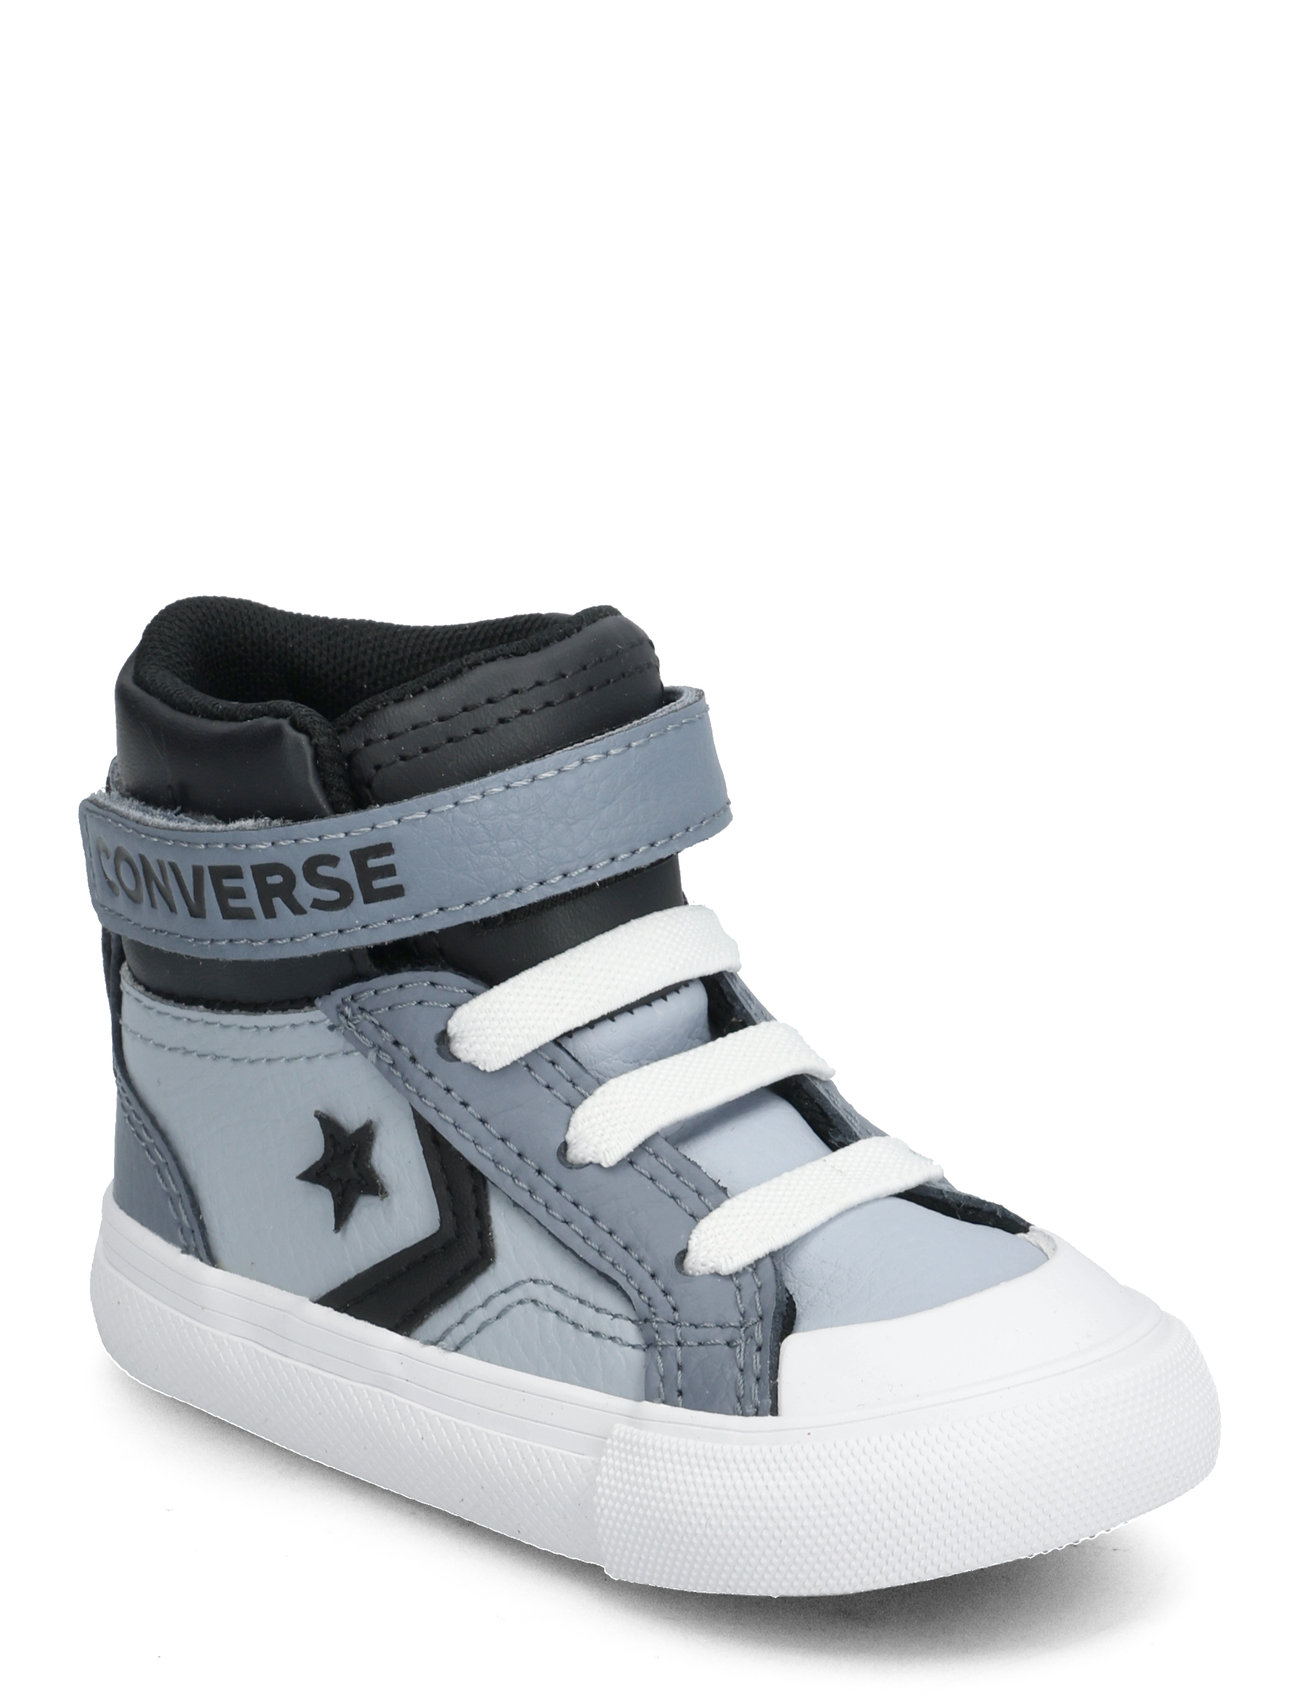 Converse Pro Blaze Strap Switzerland Sneakers | Boozt.com 